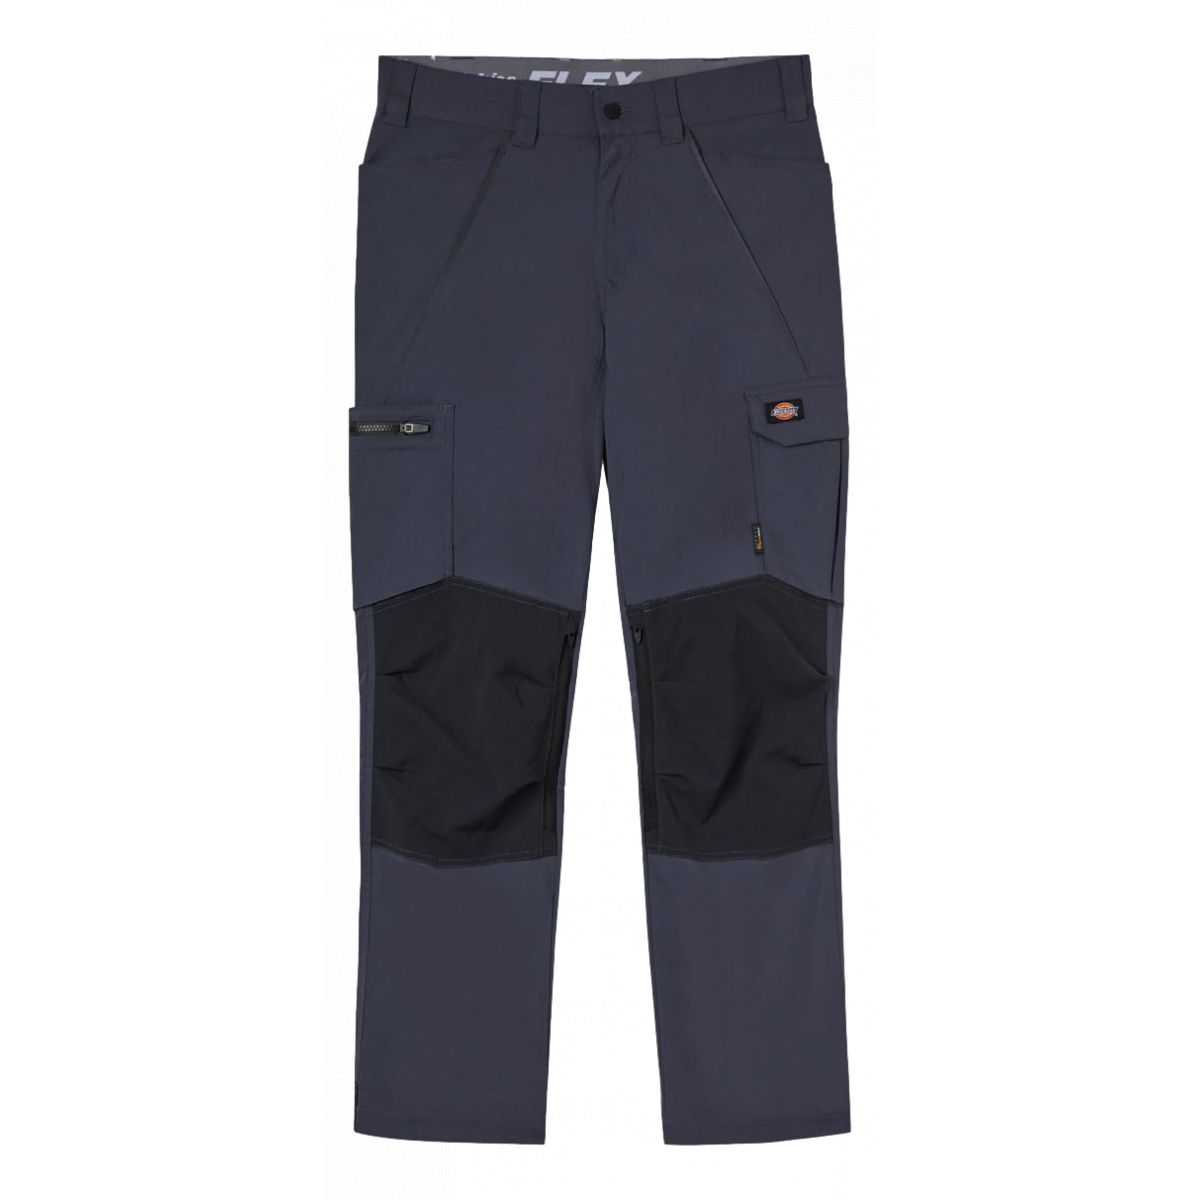 Pantalon léger Flex Gris - Dickies - Taille 38 0